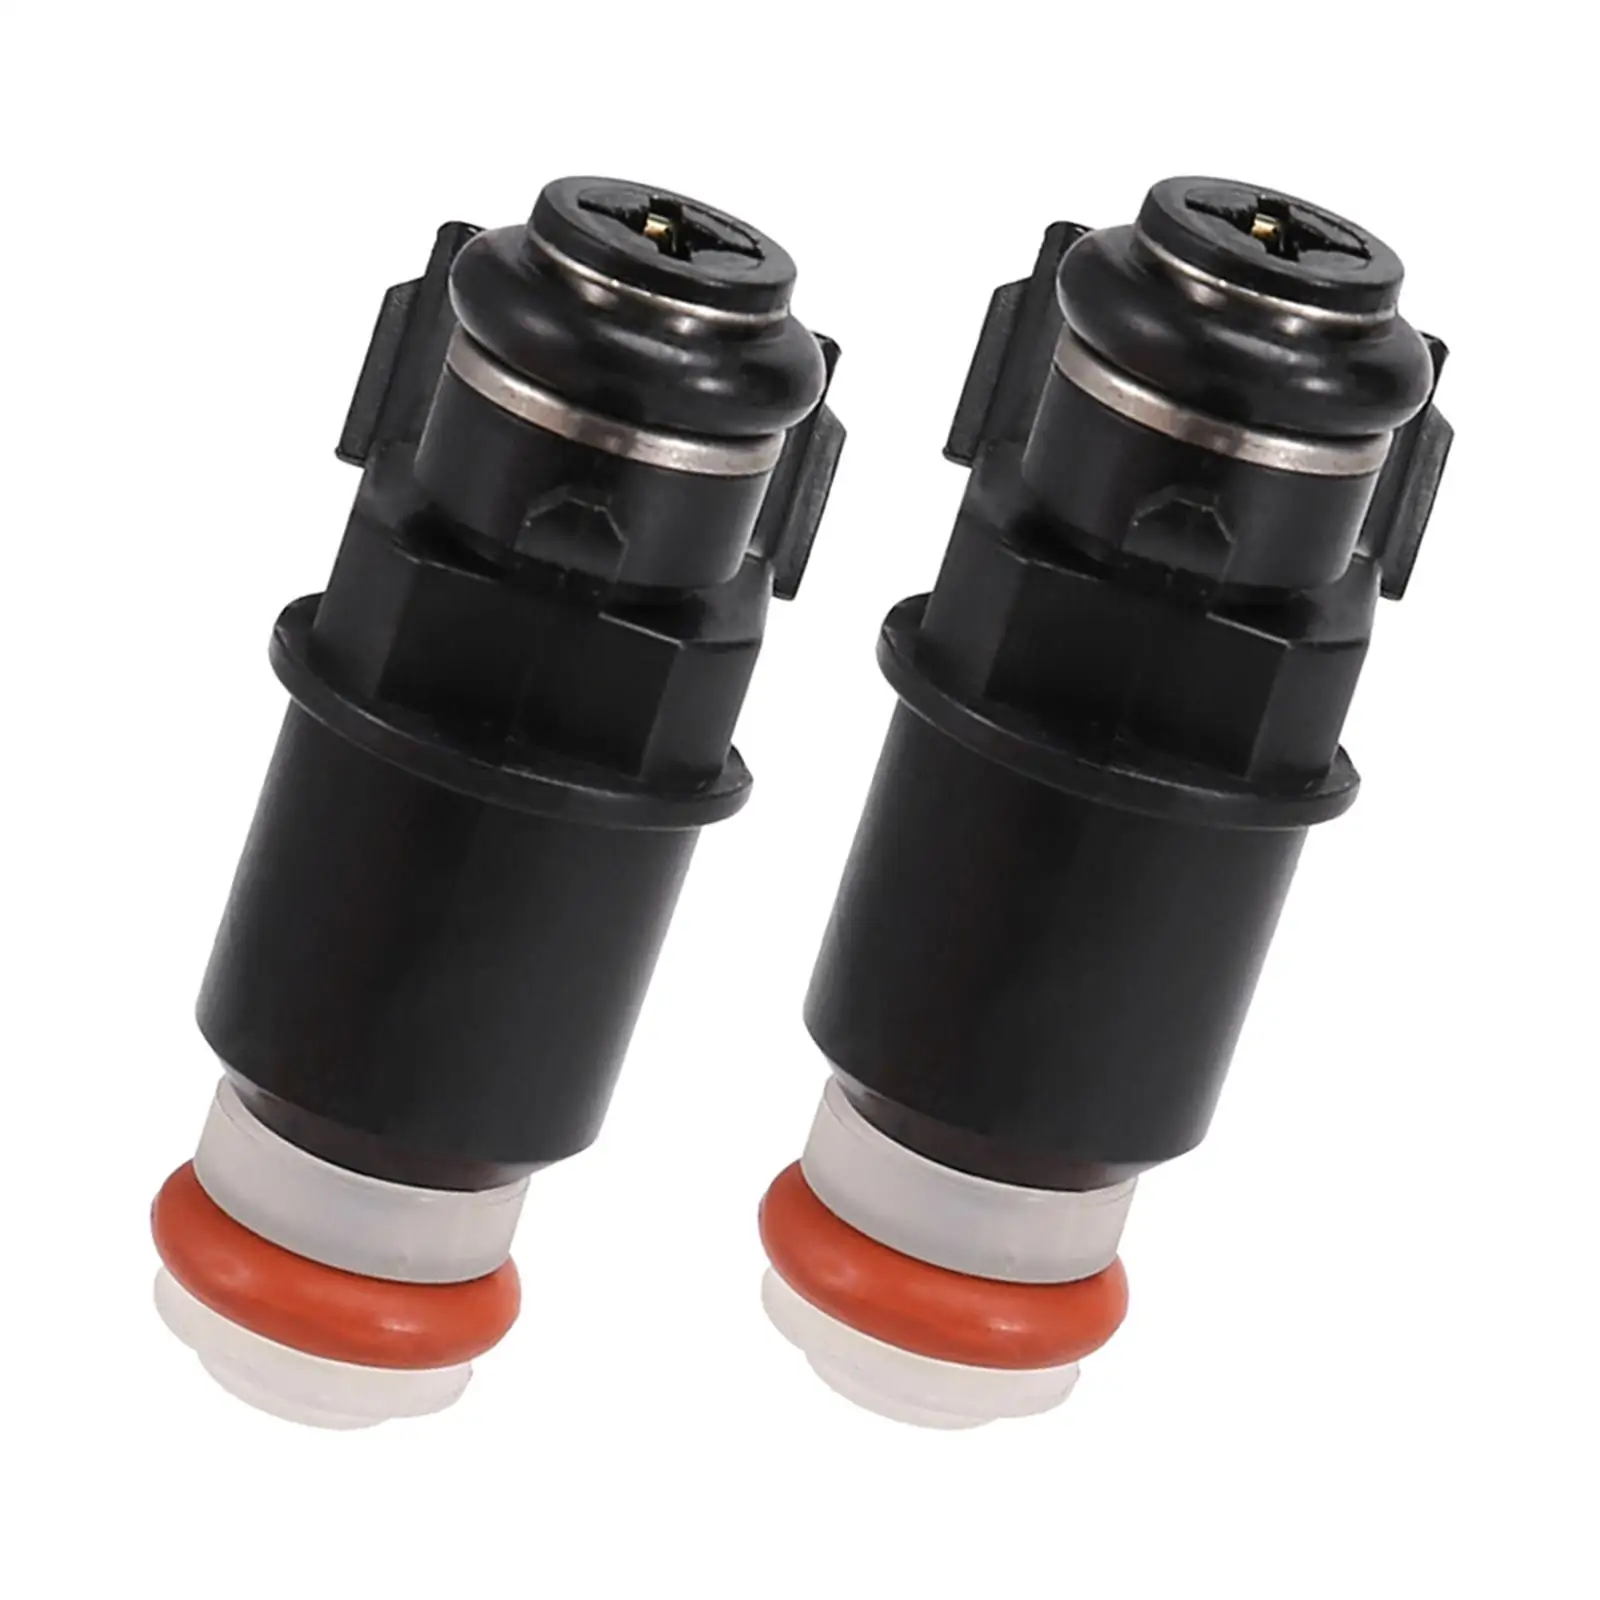 2x Fuel Injector Nozzles Durable for Suzuki Boulevard M50 C50 C109R M90